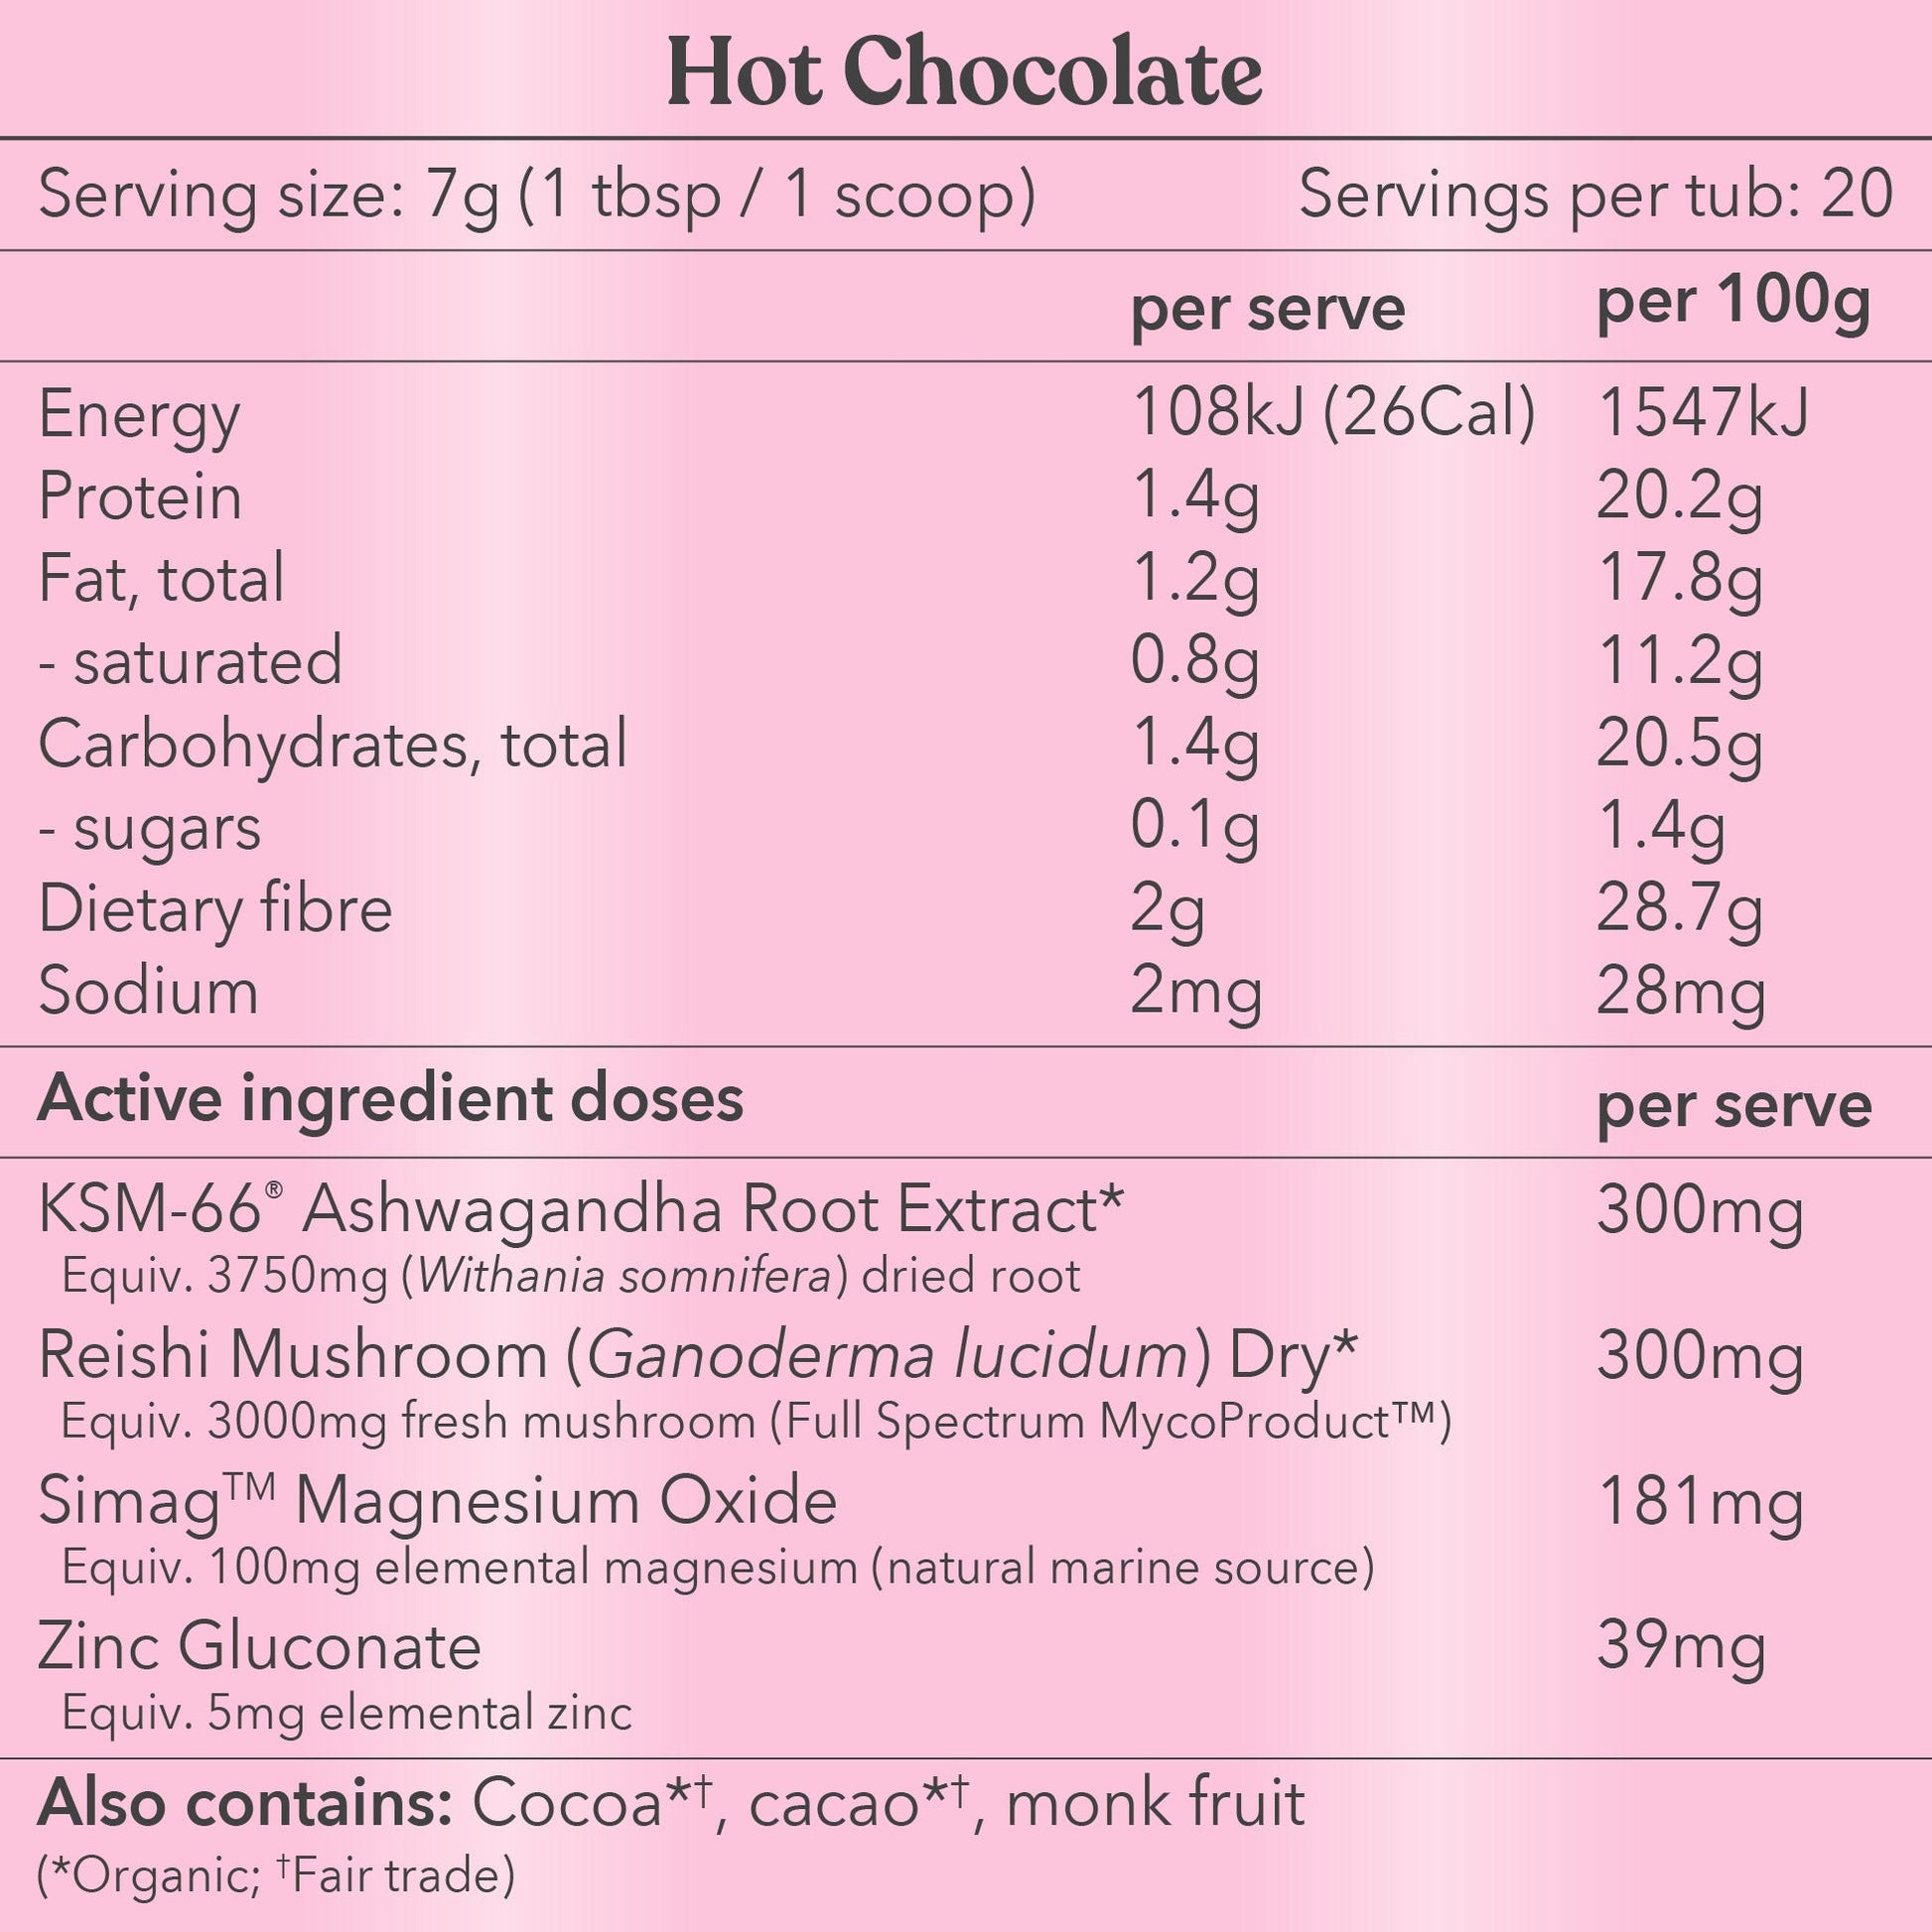 Hot Chocolate - Moodi - Functional Latte